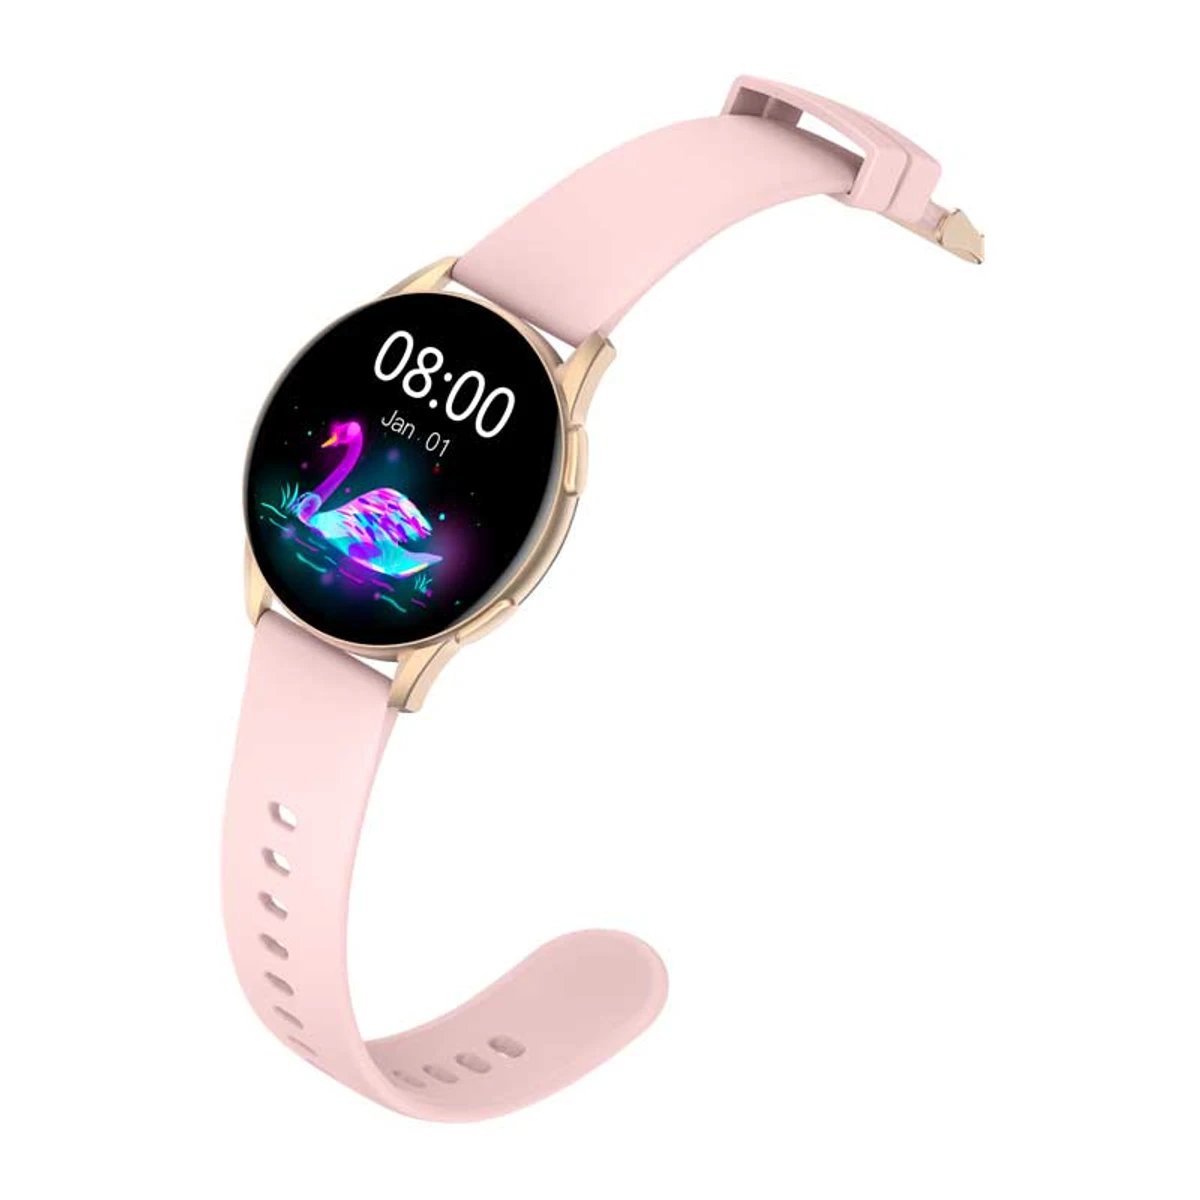 Kieslect L11 Pro Lady Smart Watch